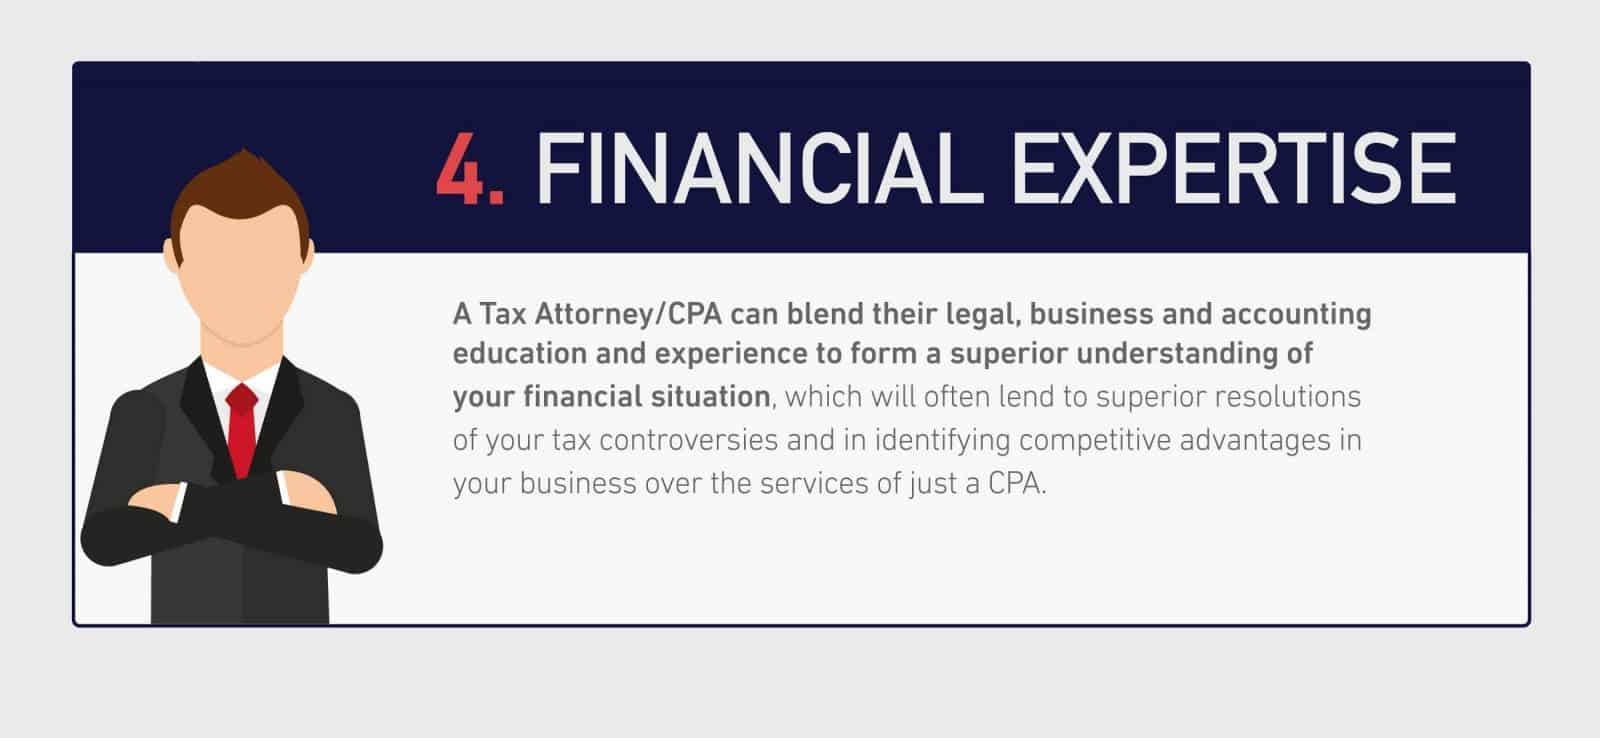 Financial-expertise-klasing-associates-oakland-tax-attorney